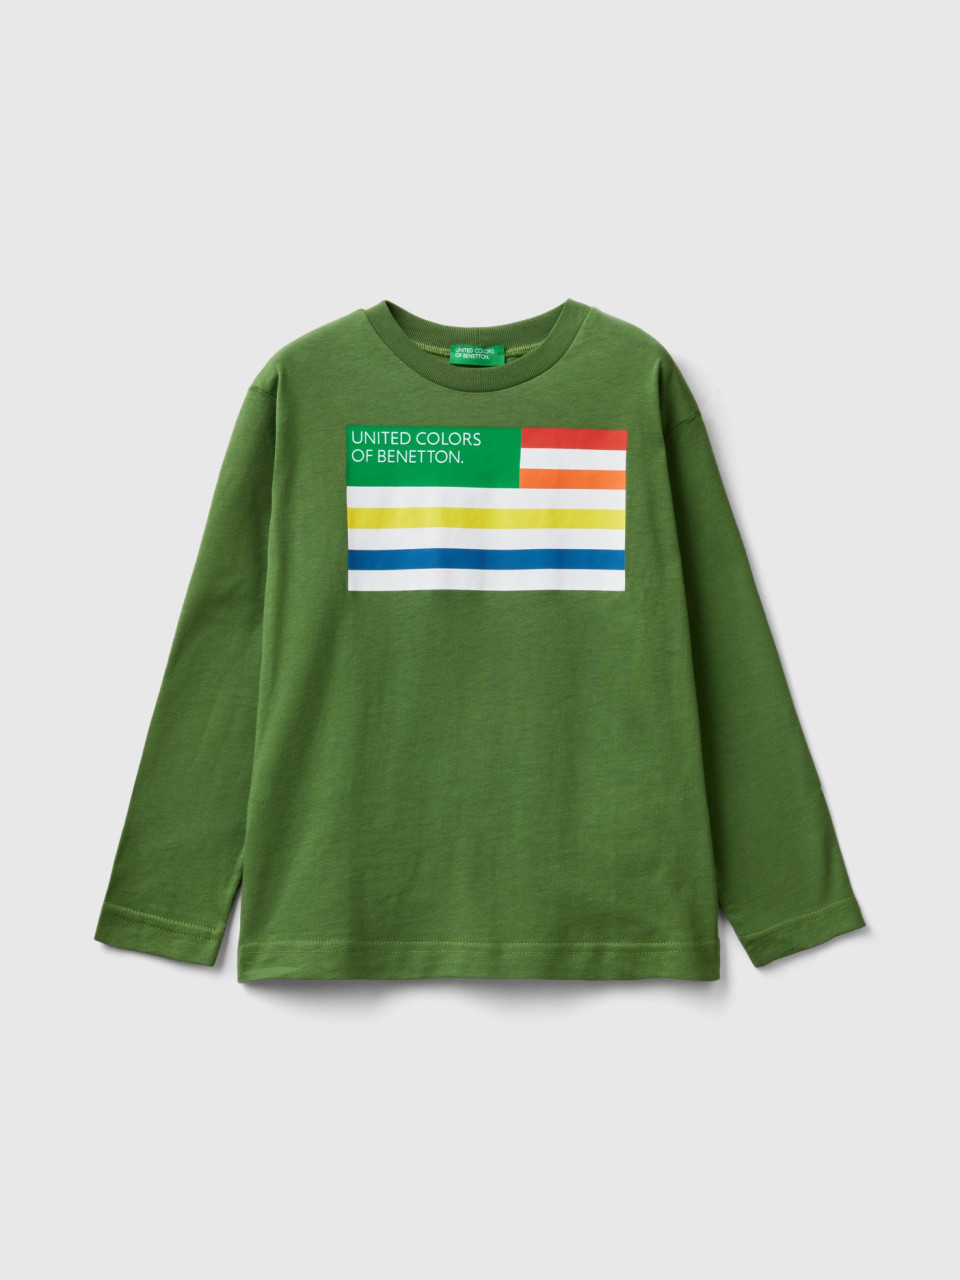 Benetton, Camiseta De Manga Larga De Algodón Orgánico, Militar, Niños